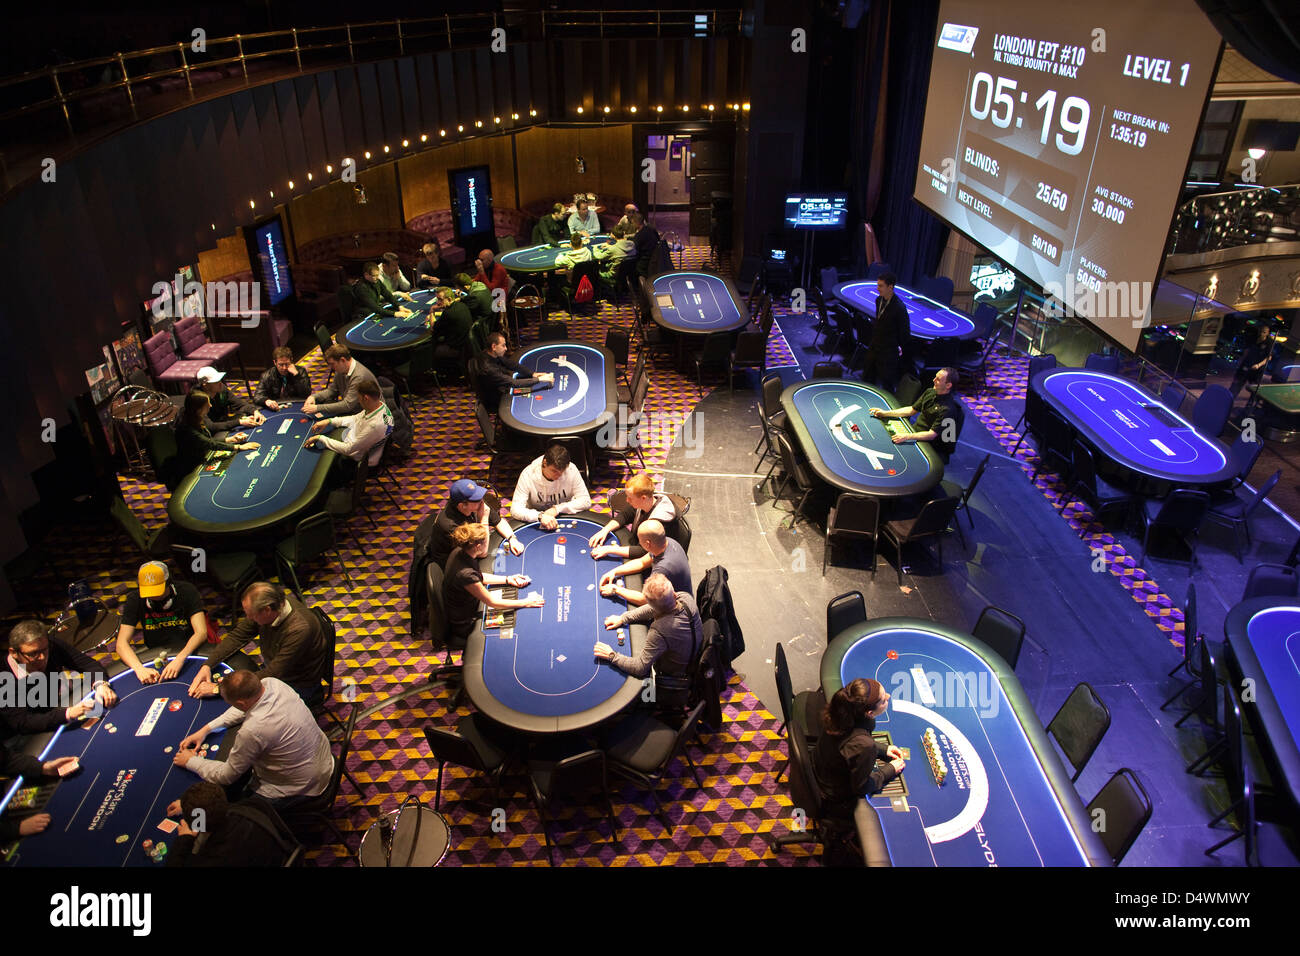 PokerStars poker room at the Hippodrome Casino bringing 24-hour poker to London, Leicester Square, London, UK Stock Photo